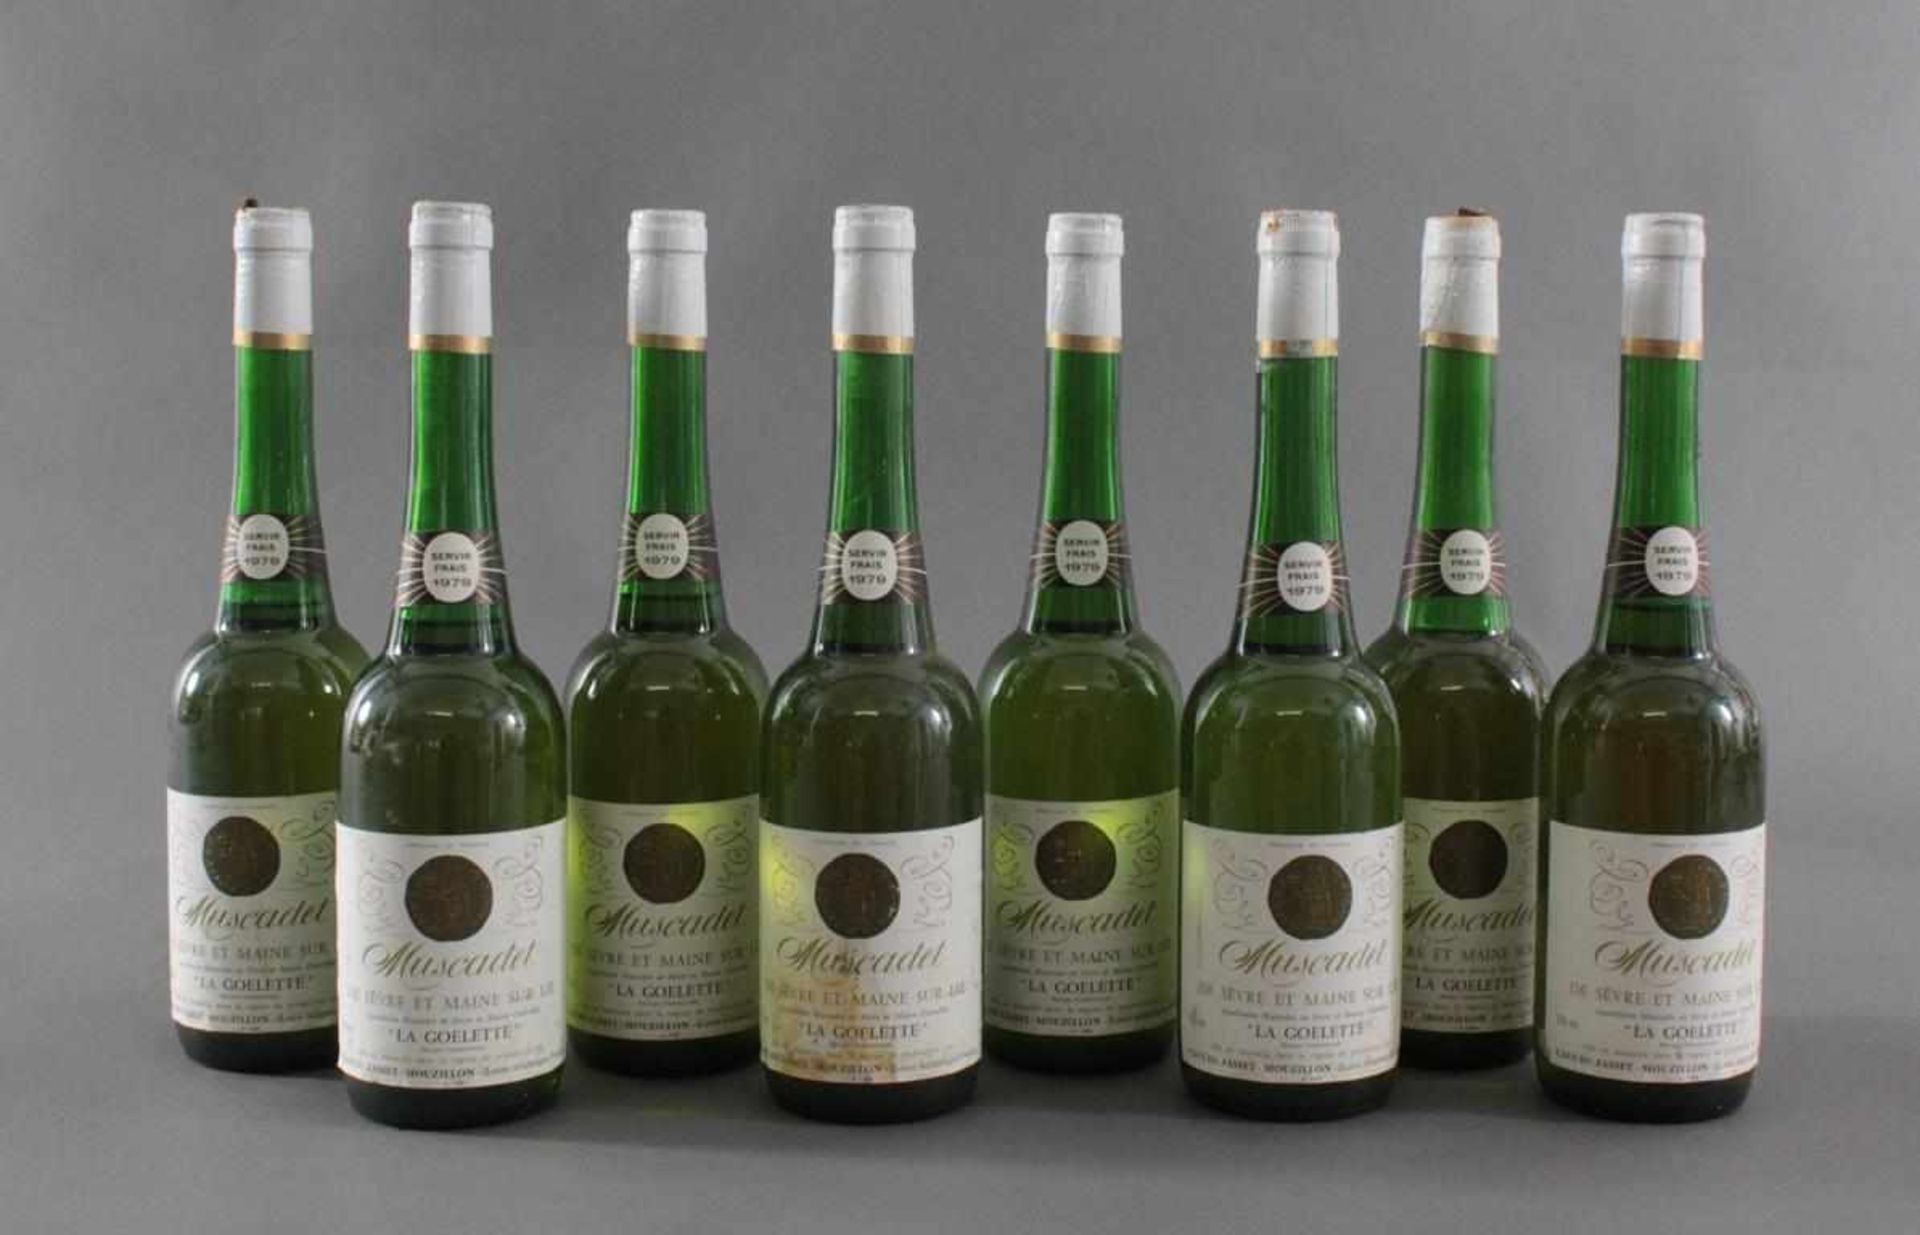 8 Flaschen 1979er Muscadet "La Goelette"Loire Atlantique- - -20.00 % buyer's premium on the hammer